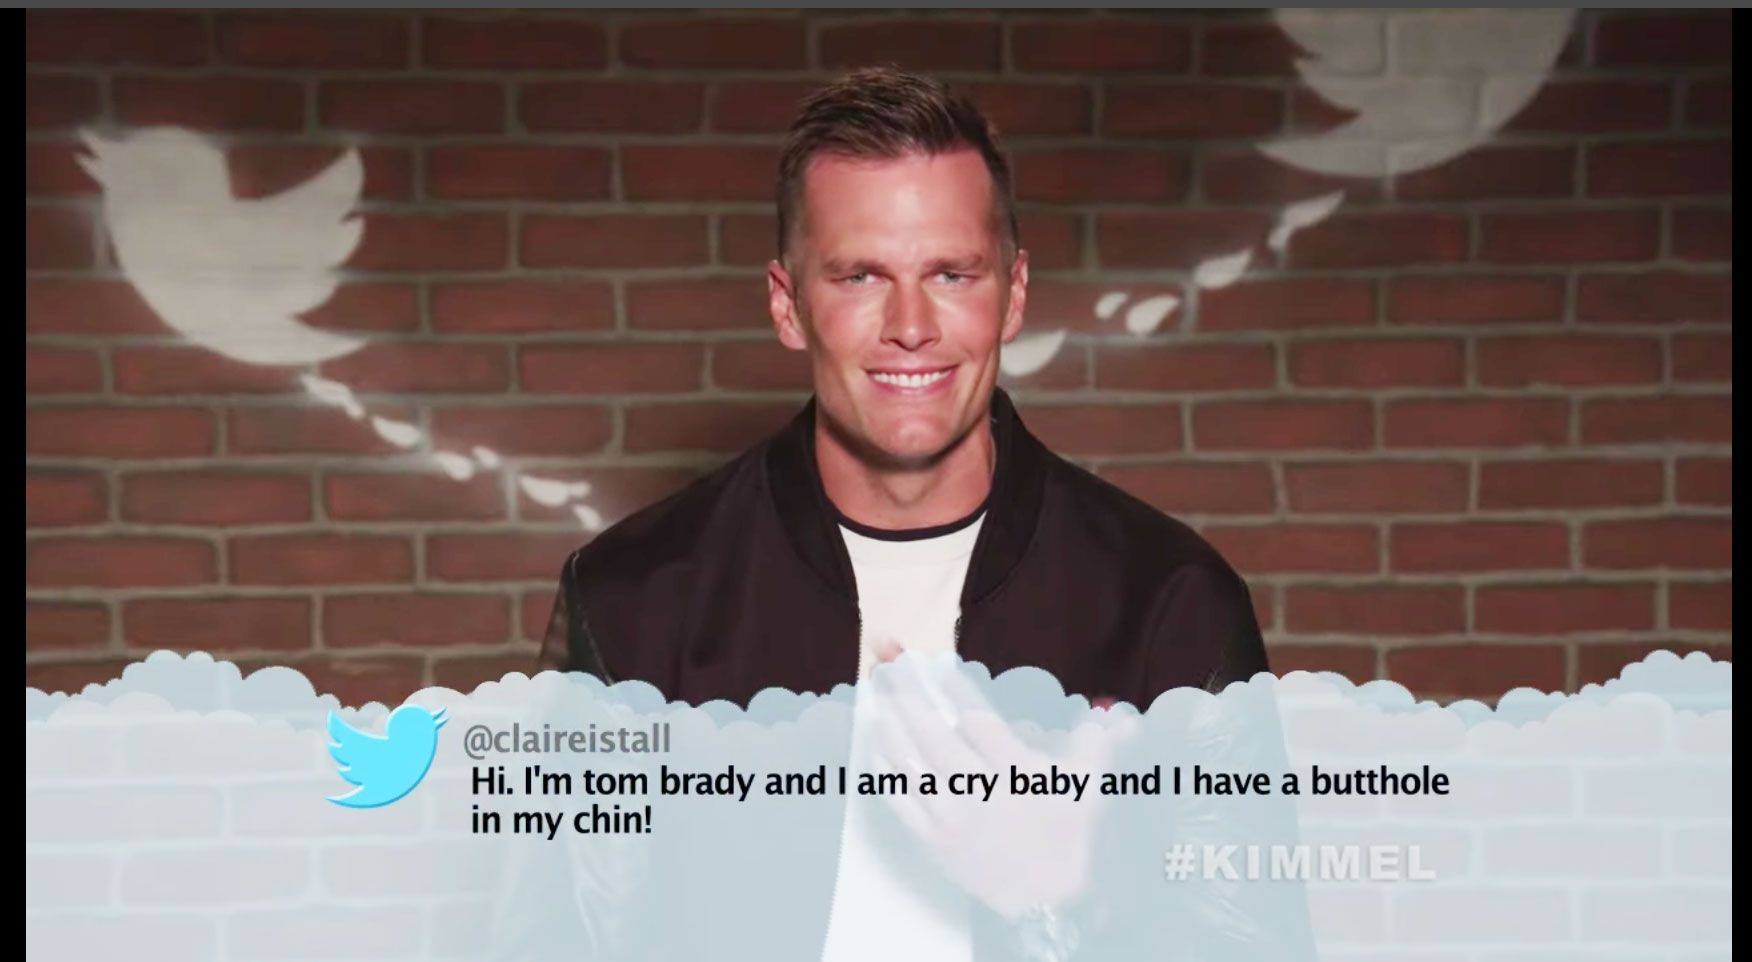 Watch Tom Brady React to Mean Tweets in a New Jimmy Kimmel Video